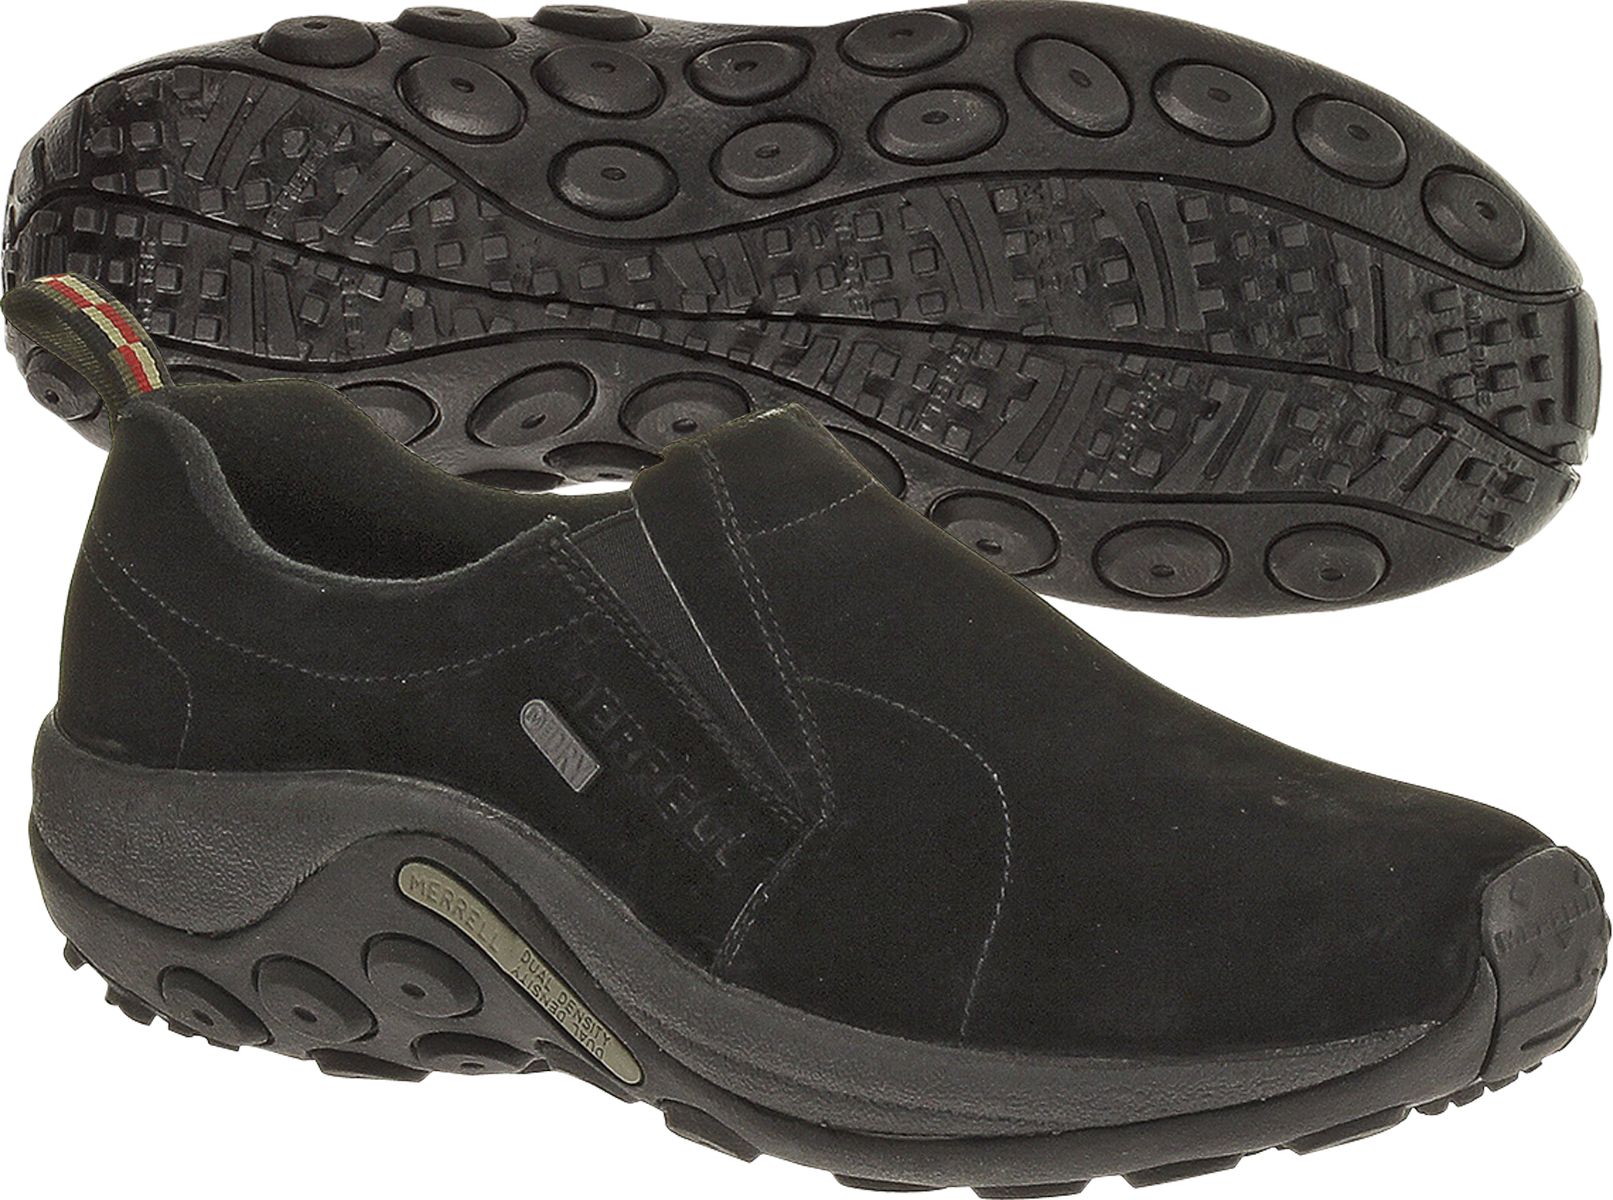 waterproof casual shoes